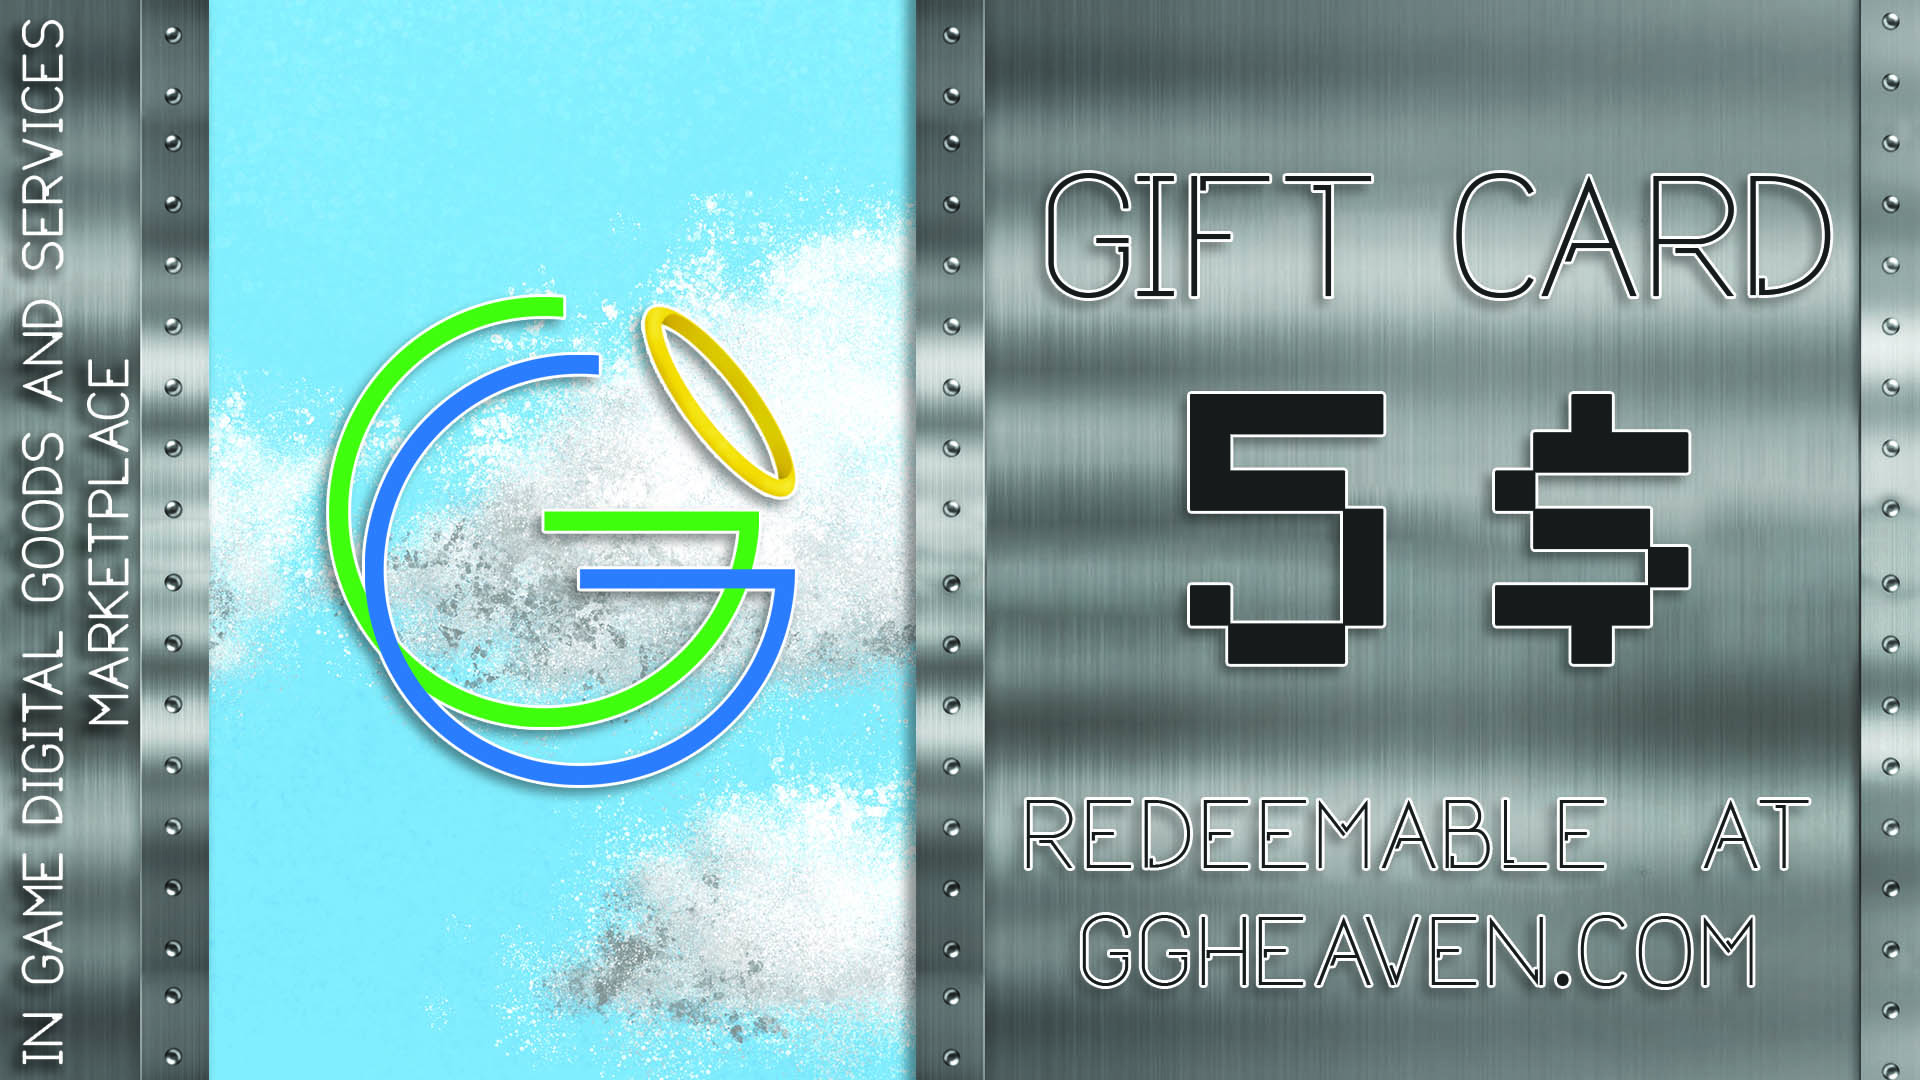 GGHeaven.com 5$ Gift Card 6.27 usd